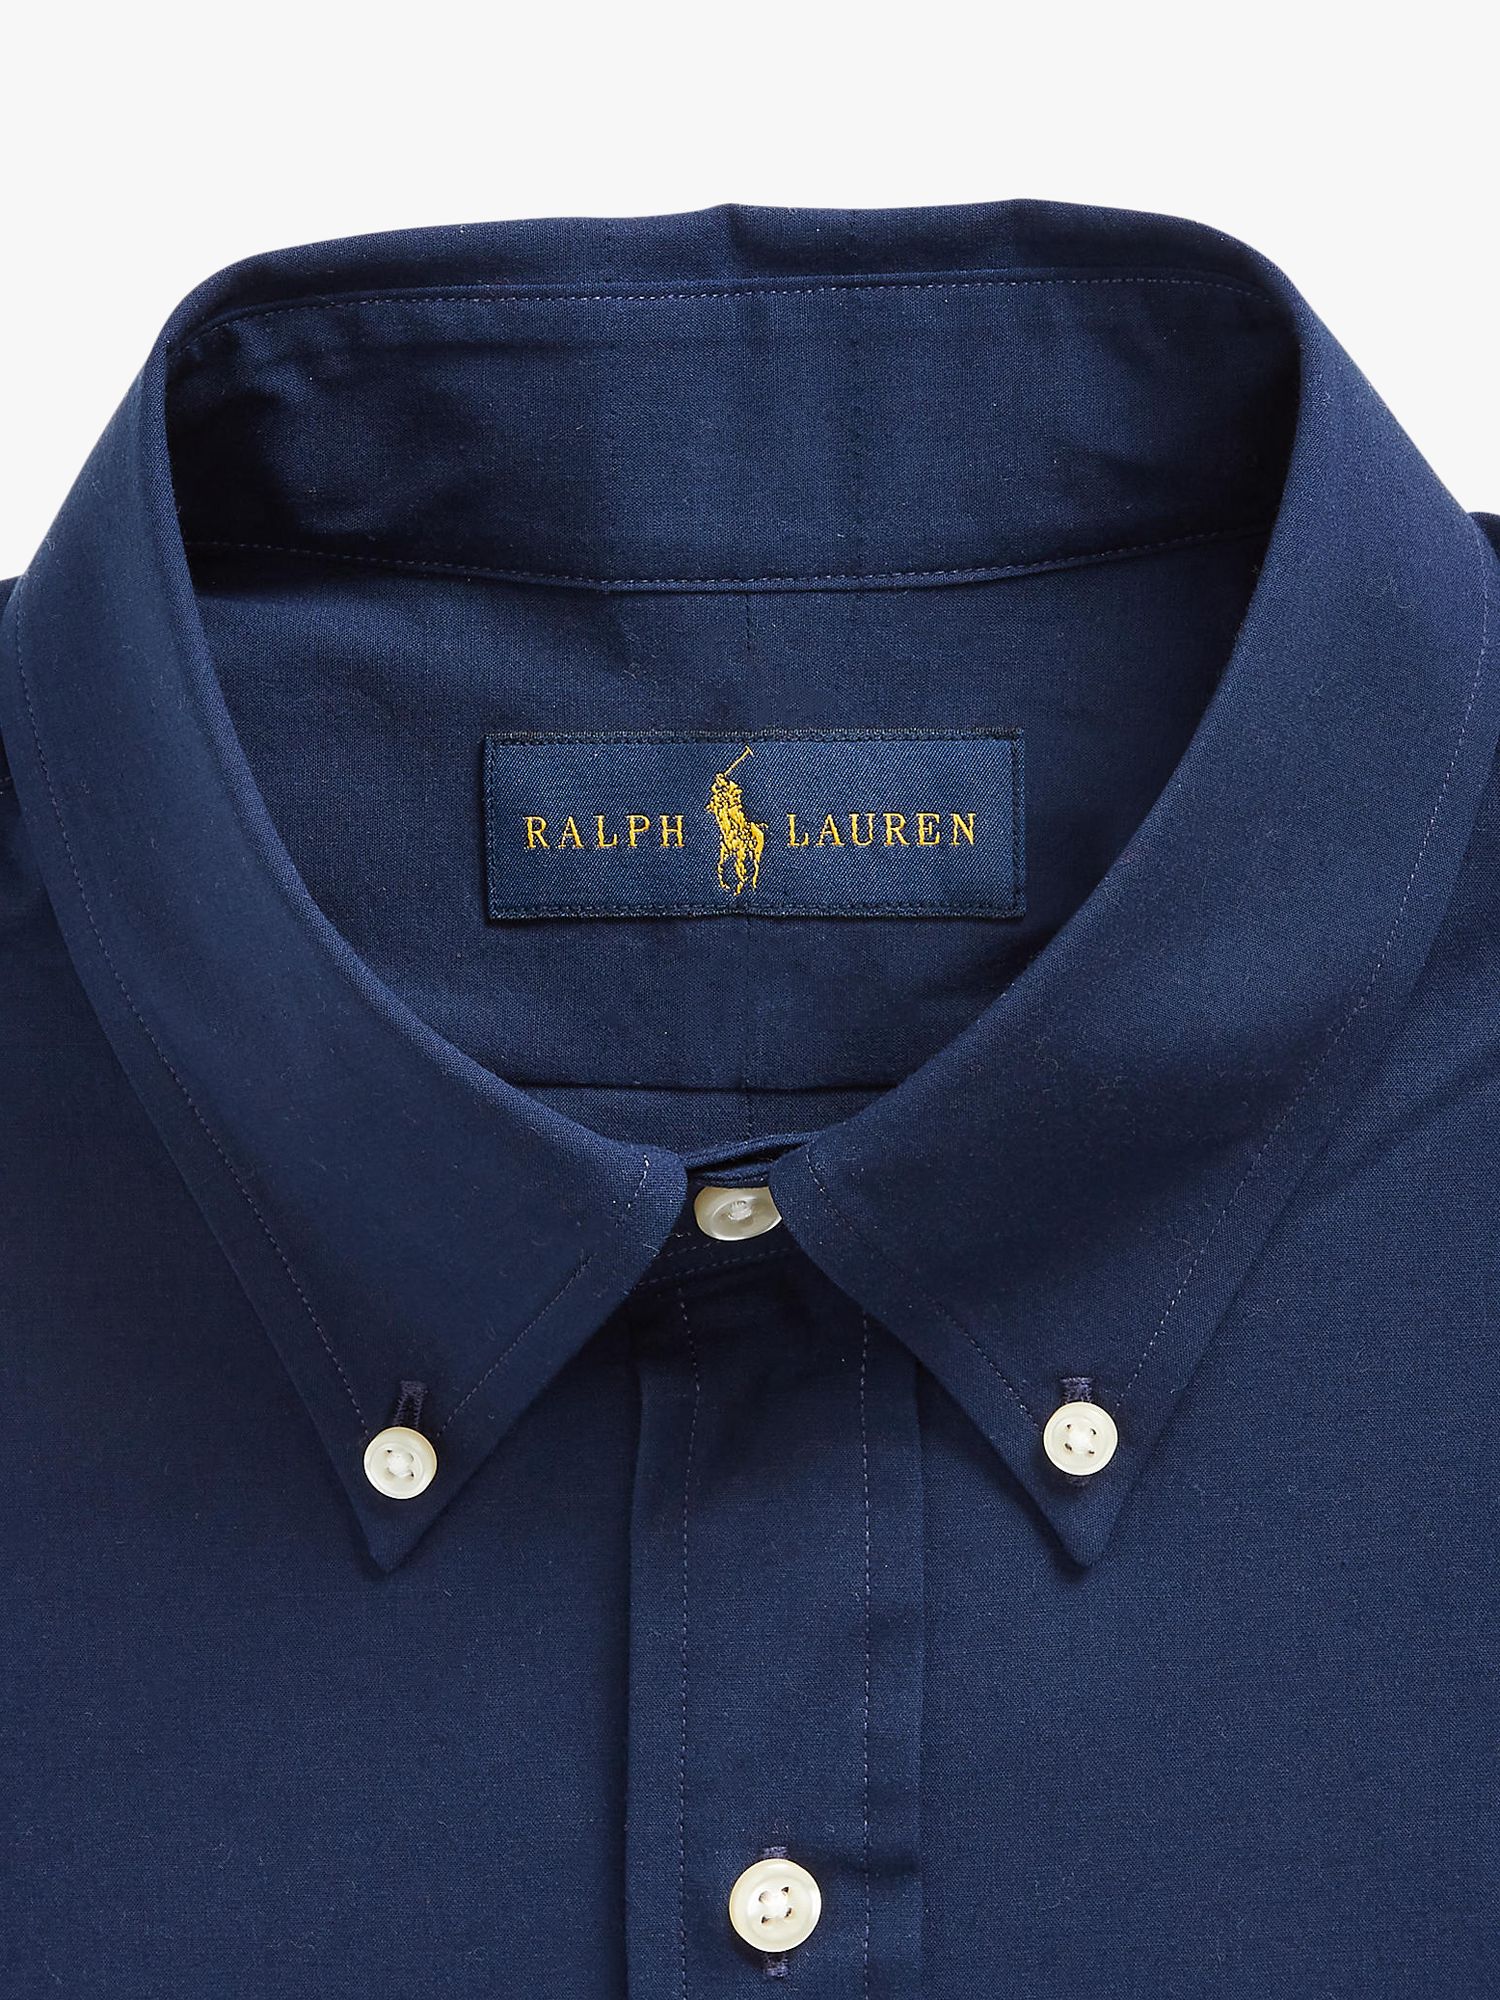 Buy Polo Ralph Lauren Slim Fit Stretch Poplin Shirt Online at johnlewis.com